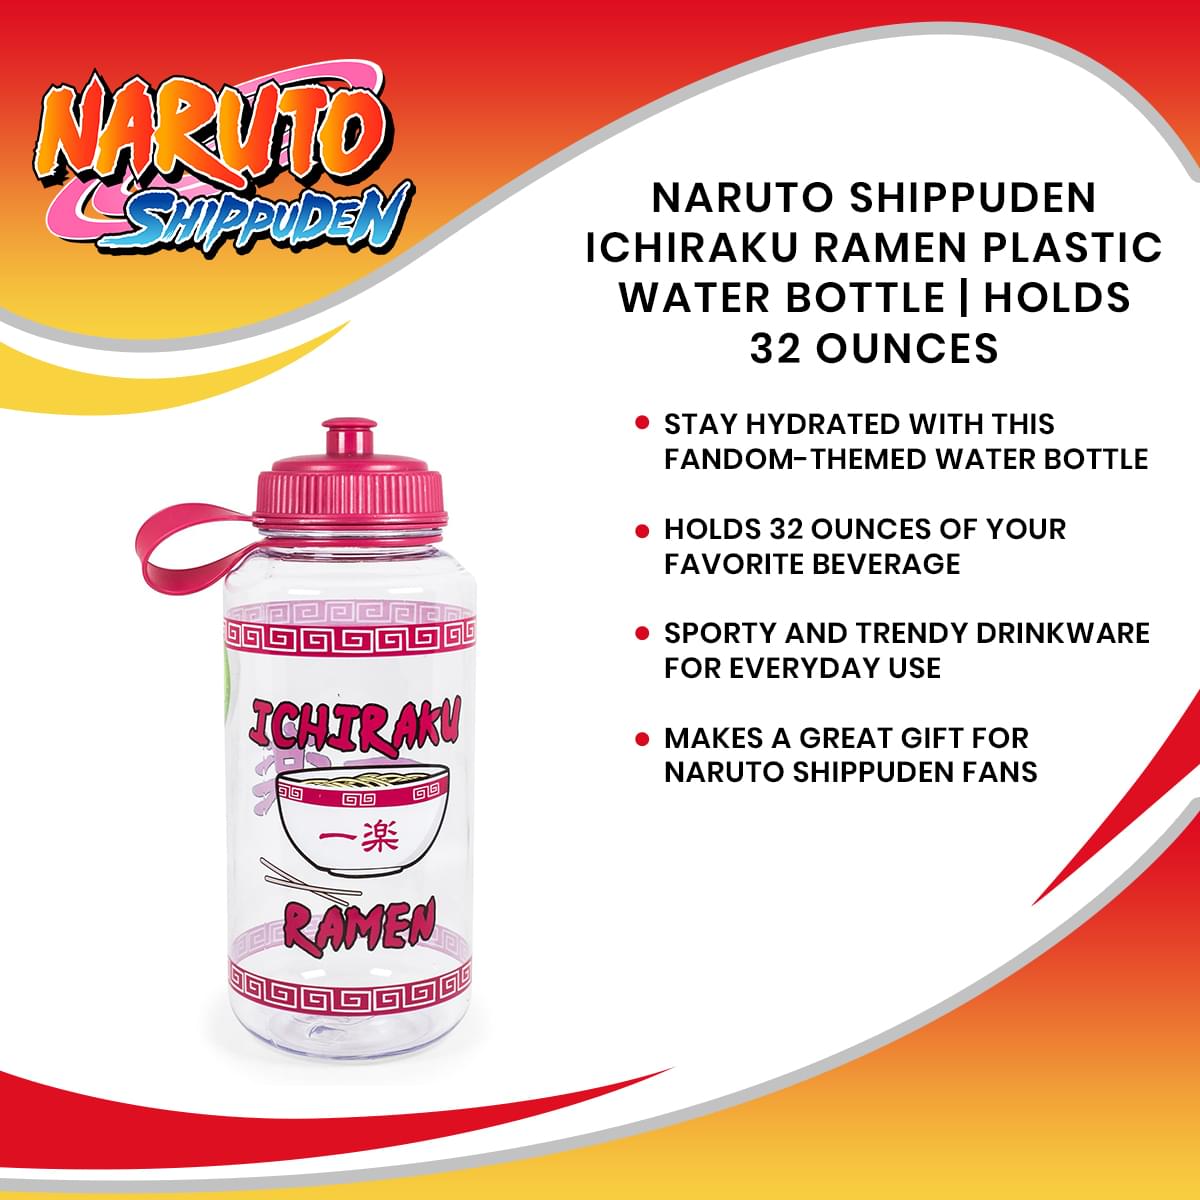 Naurto Shippuden Ichiraku Ramen Plastic Water Bottle | Holds 32 Ounces